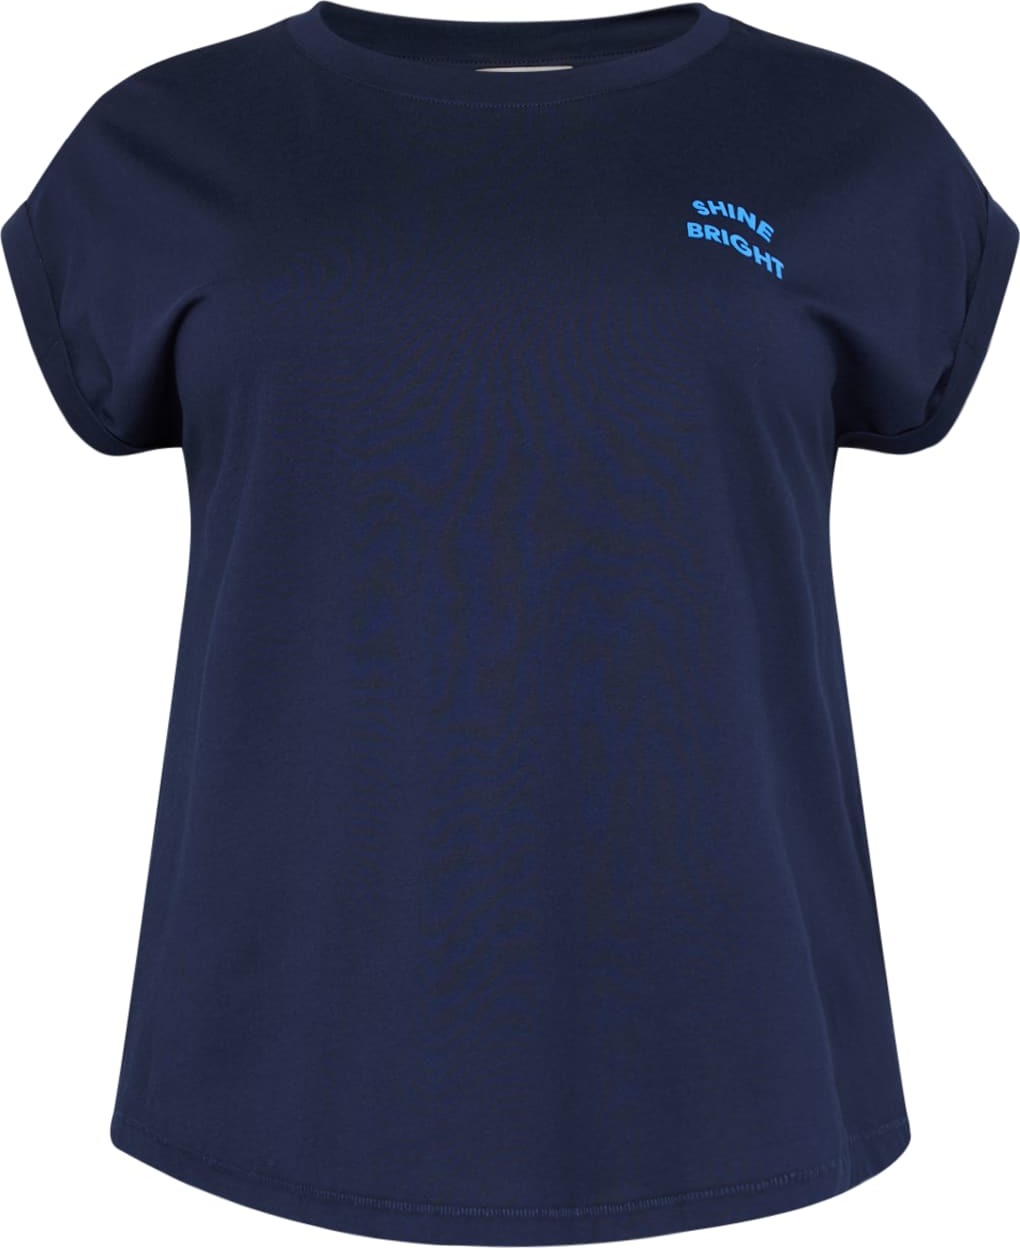 Esprit Curves Tričko modrá / námořnická modř